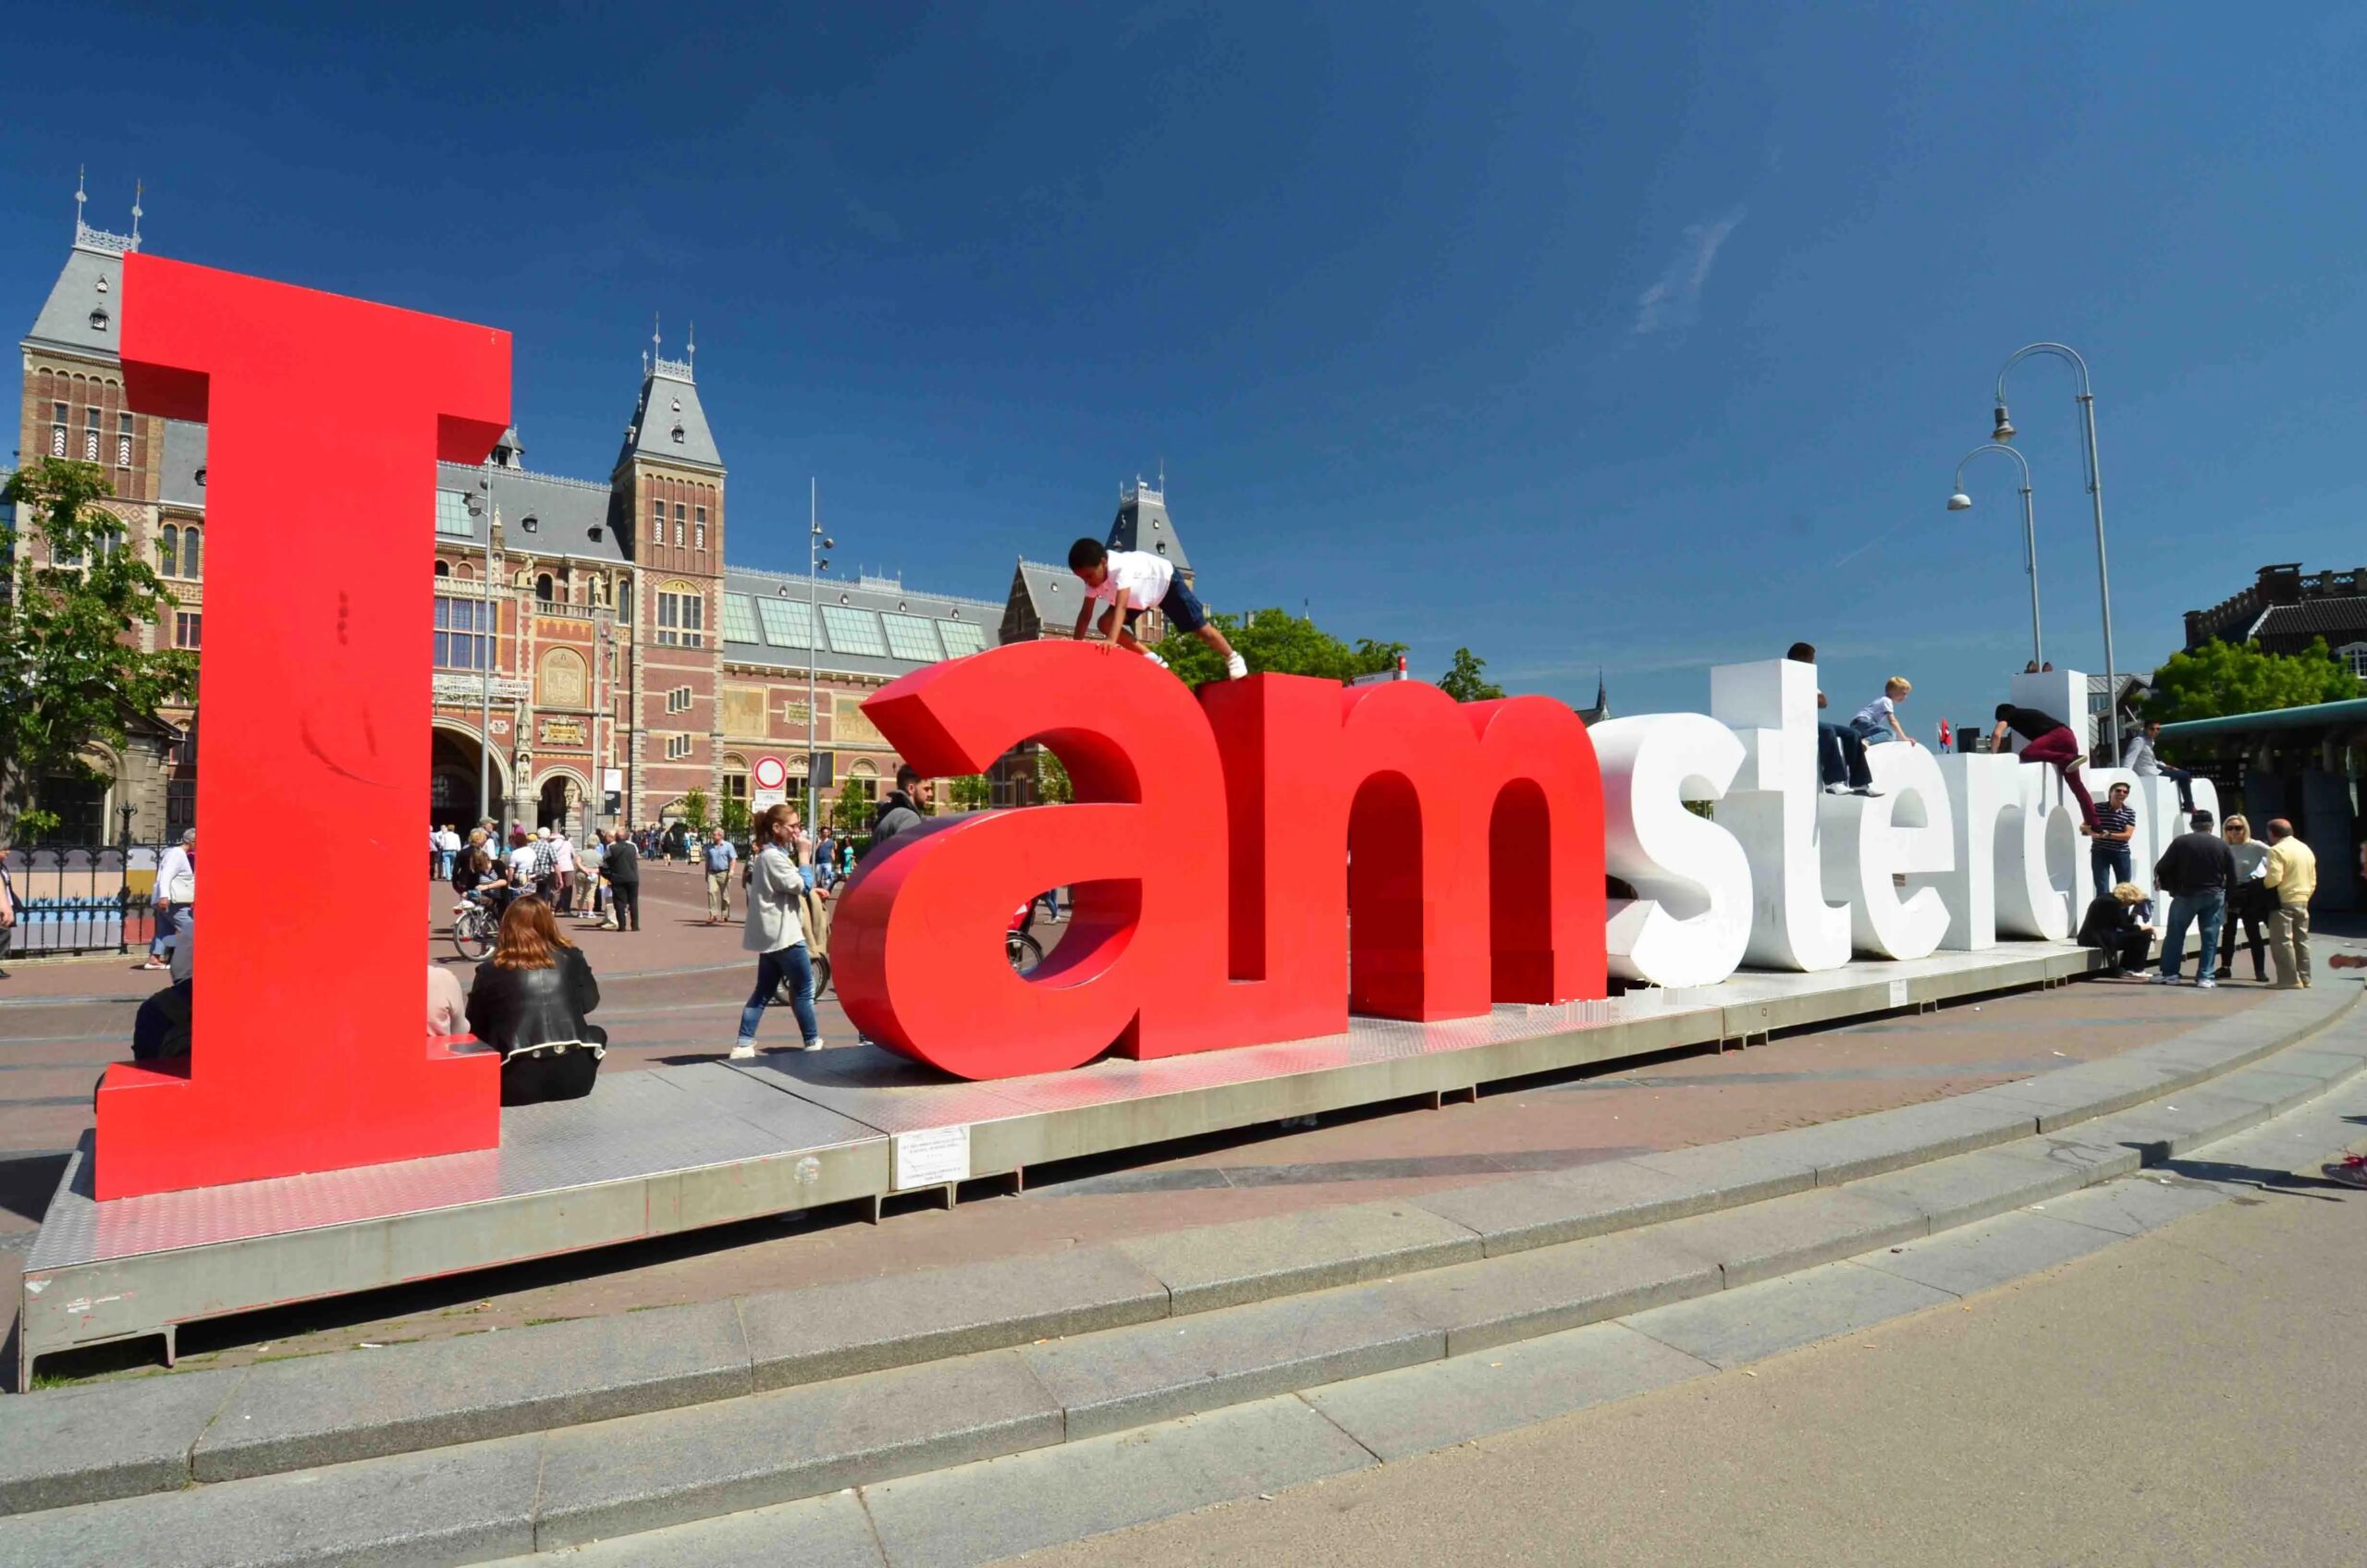 BEATBRDG Music Industry Internships - Sightseeing at the Iamsterdam sign in Amsterdam